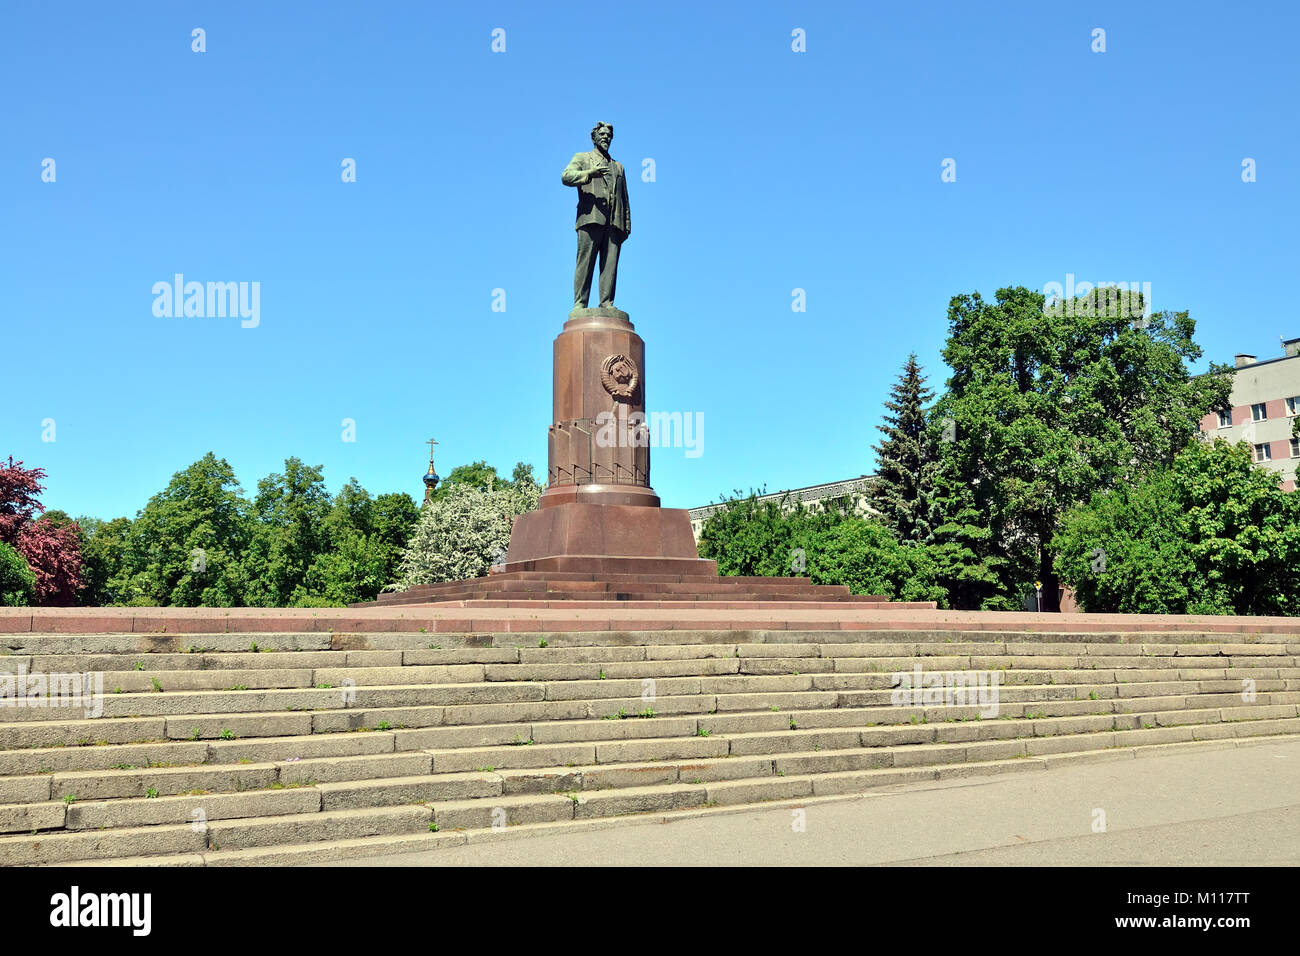 Monument to revolutionary leader Mikhail Ivanovich Kalinin. Kaliningrad, Russia Stock Photo